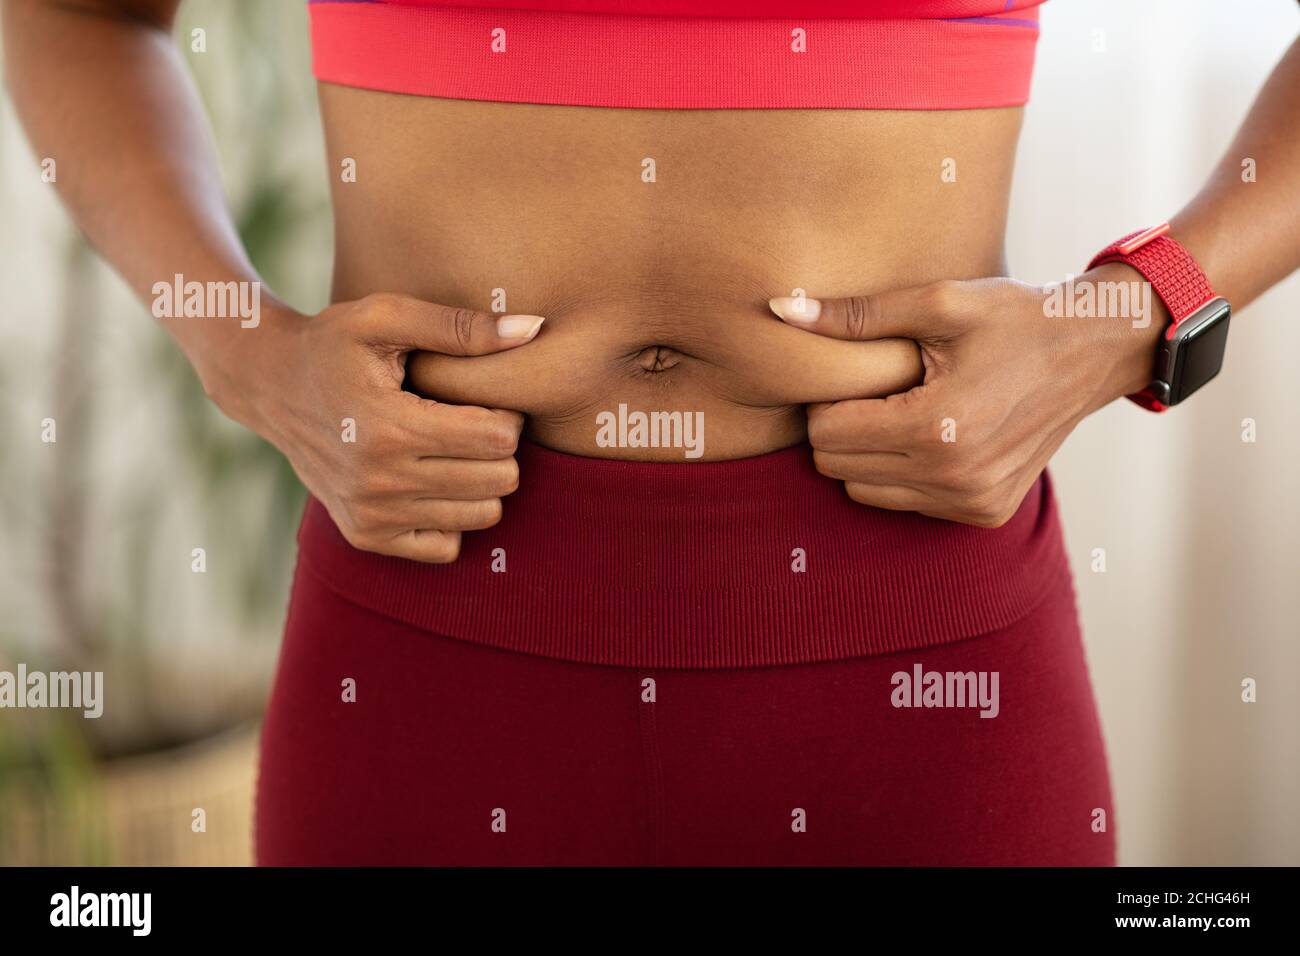 Woman Underwear Touching Her Slim Belly Stock Photo 274969364